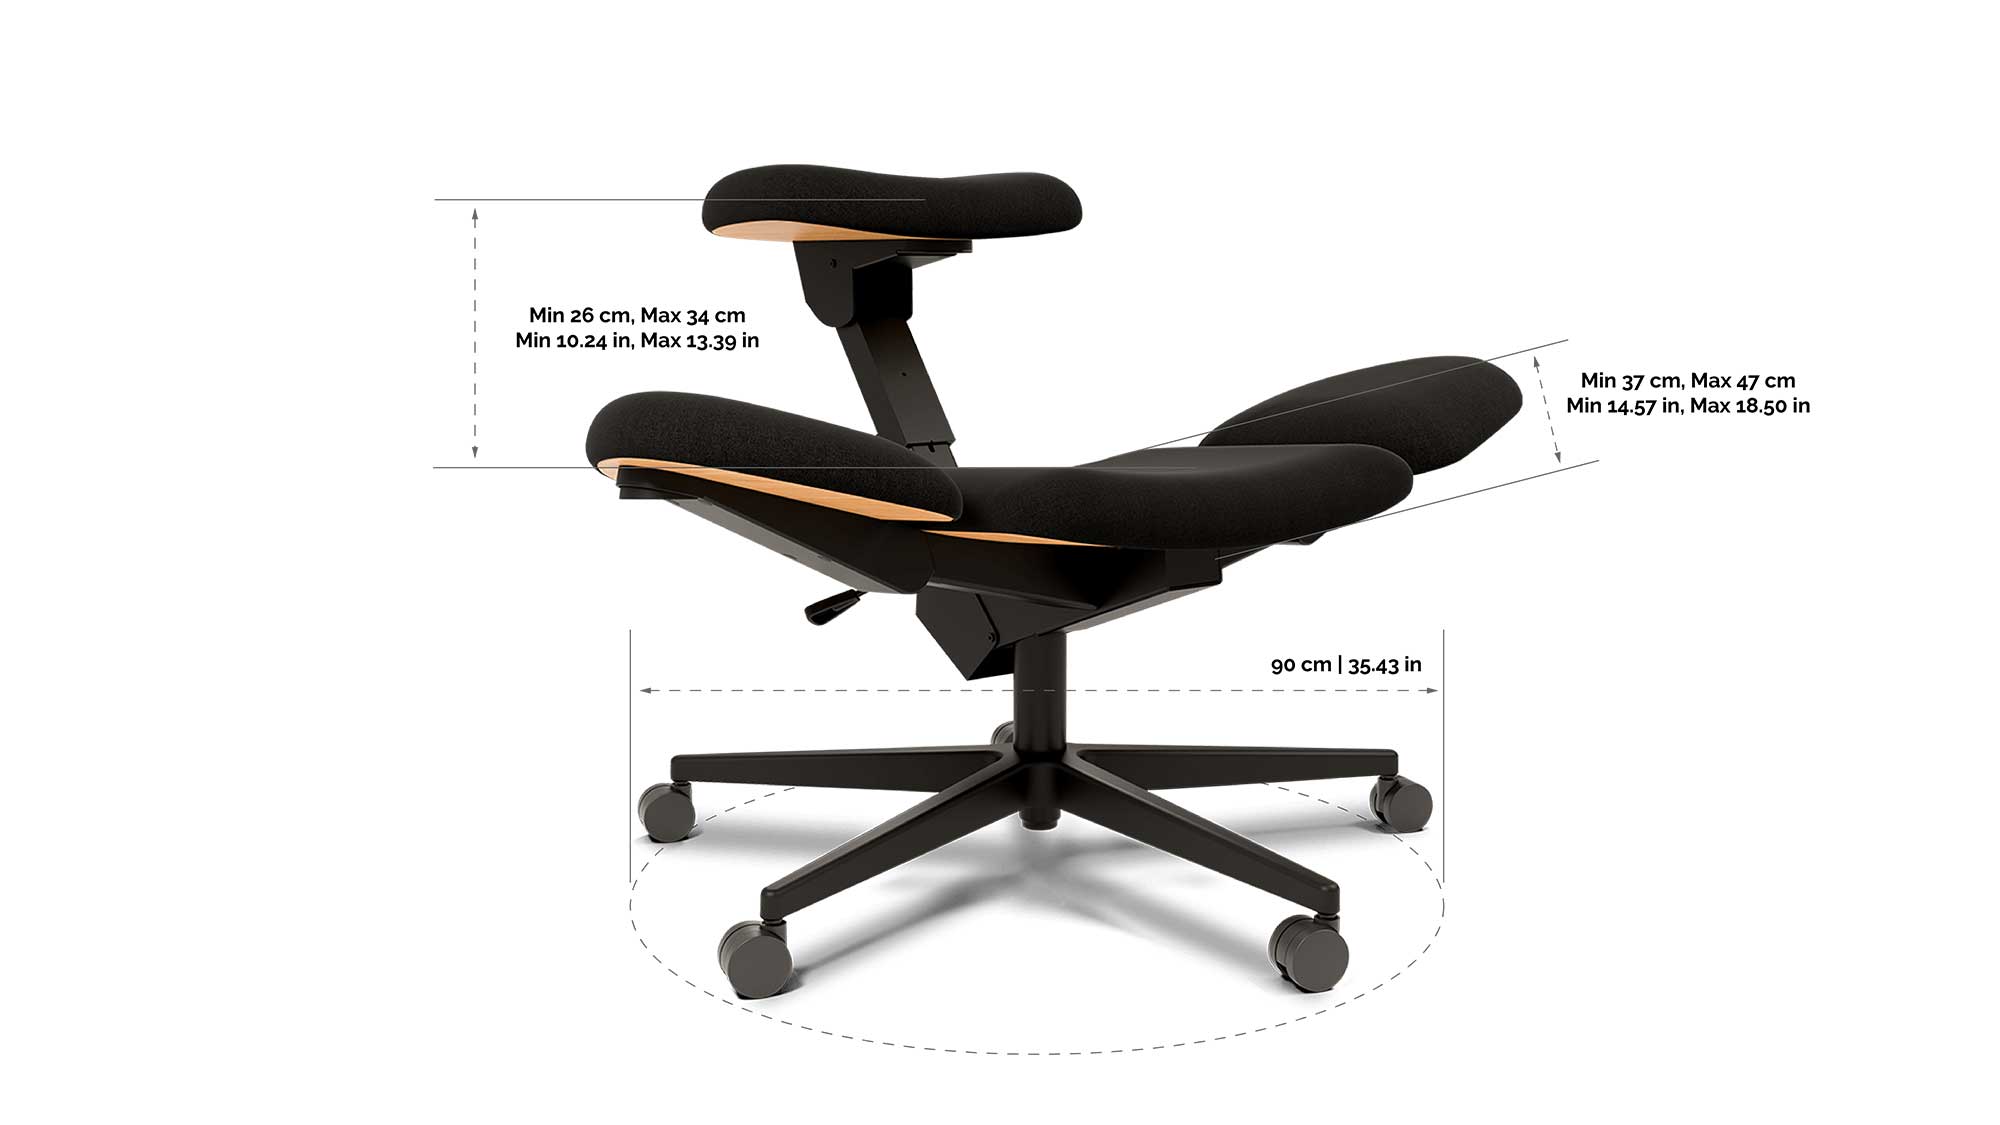 Chair_Dimensions-3d-rendered-2.jpg